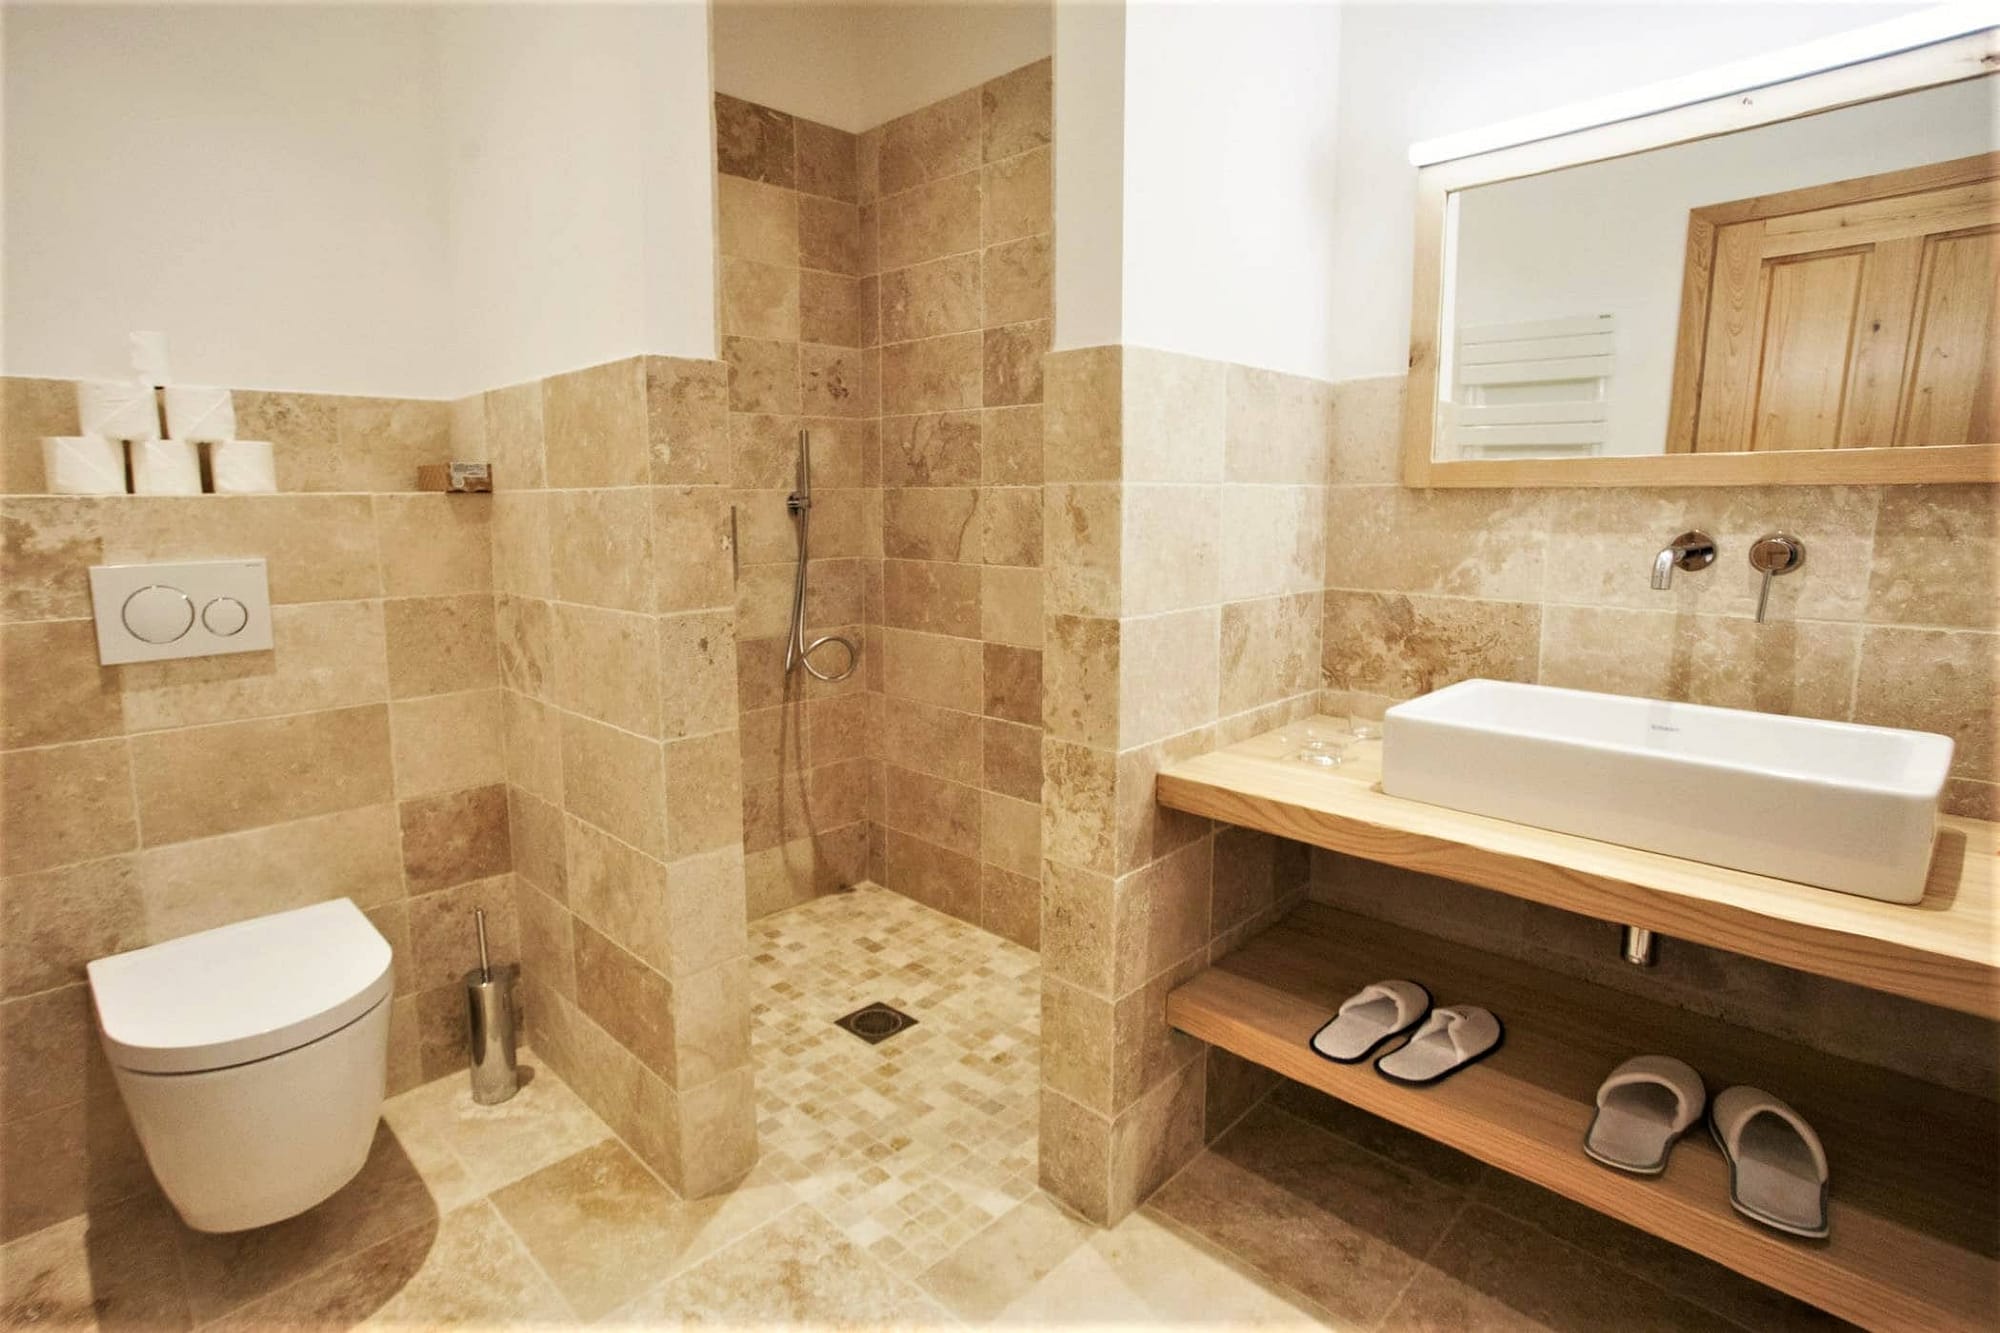 Salle de bain avec douche / Bathroom with shower